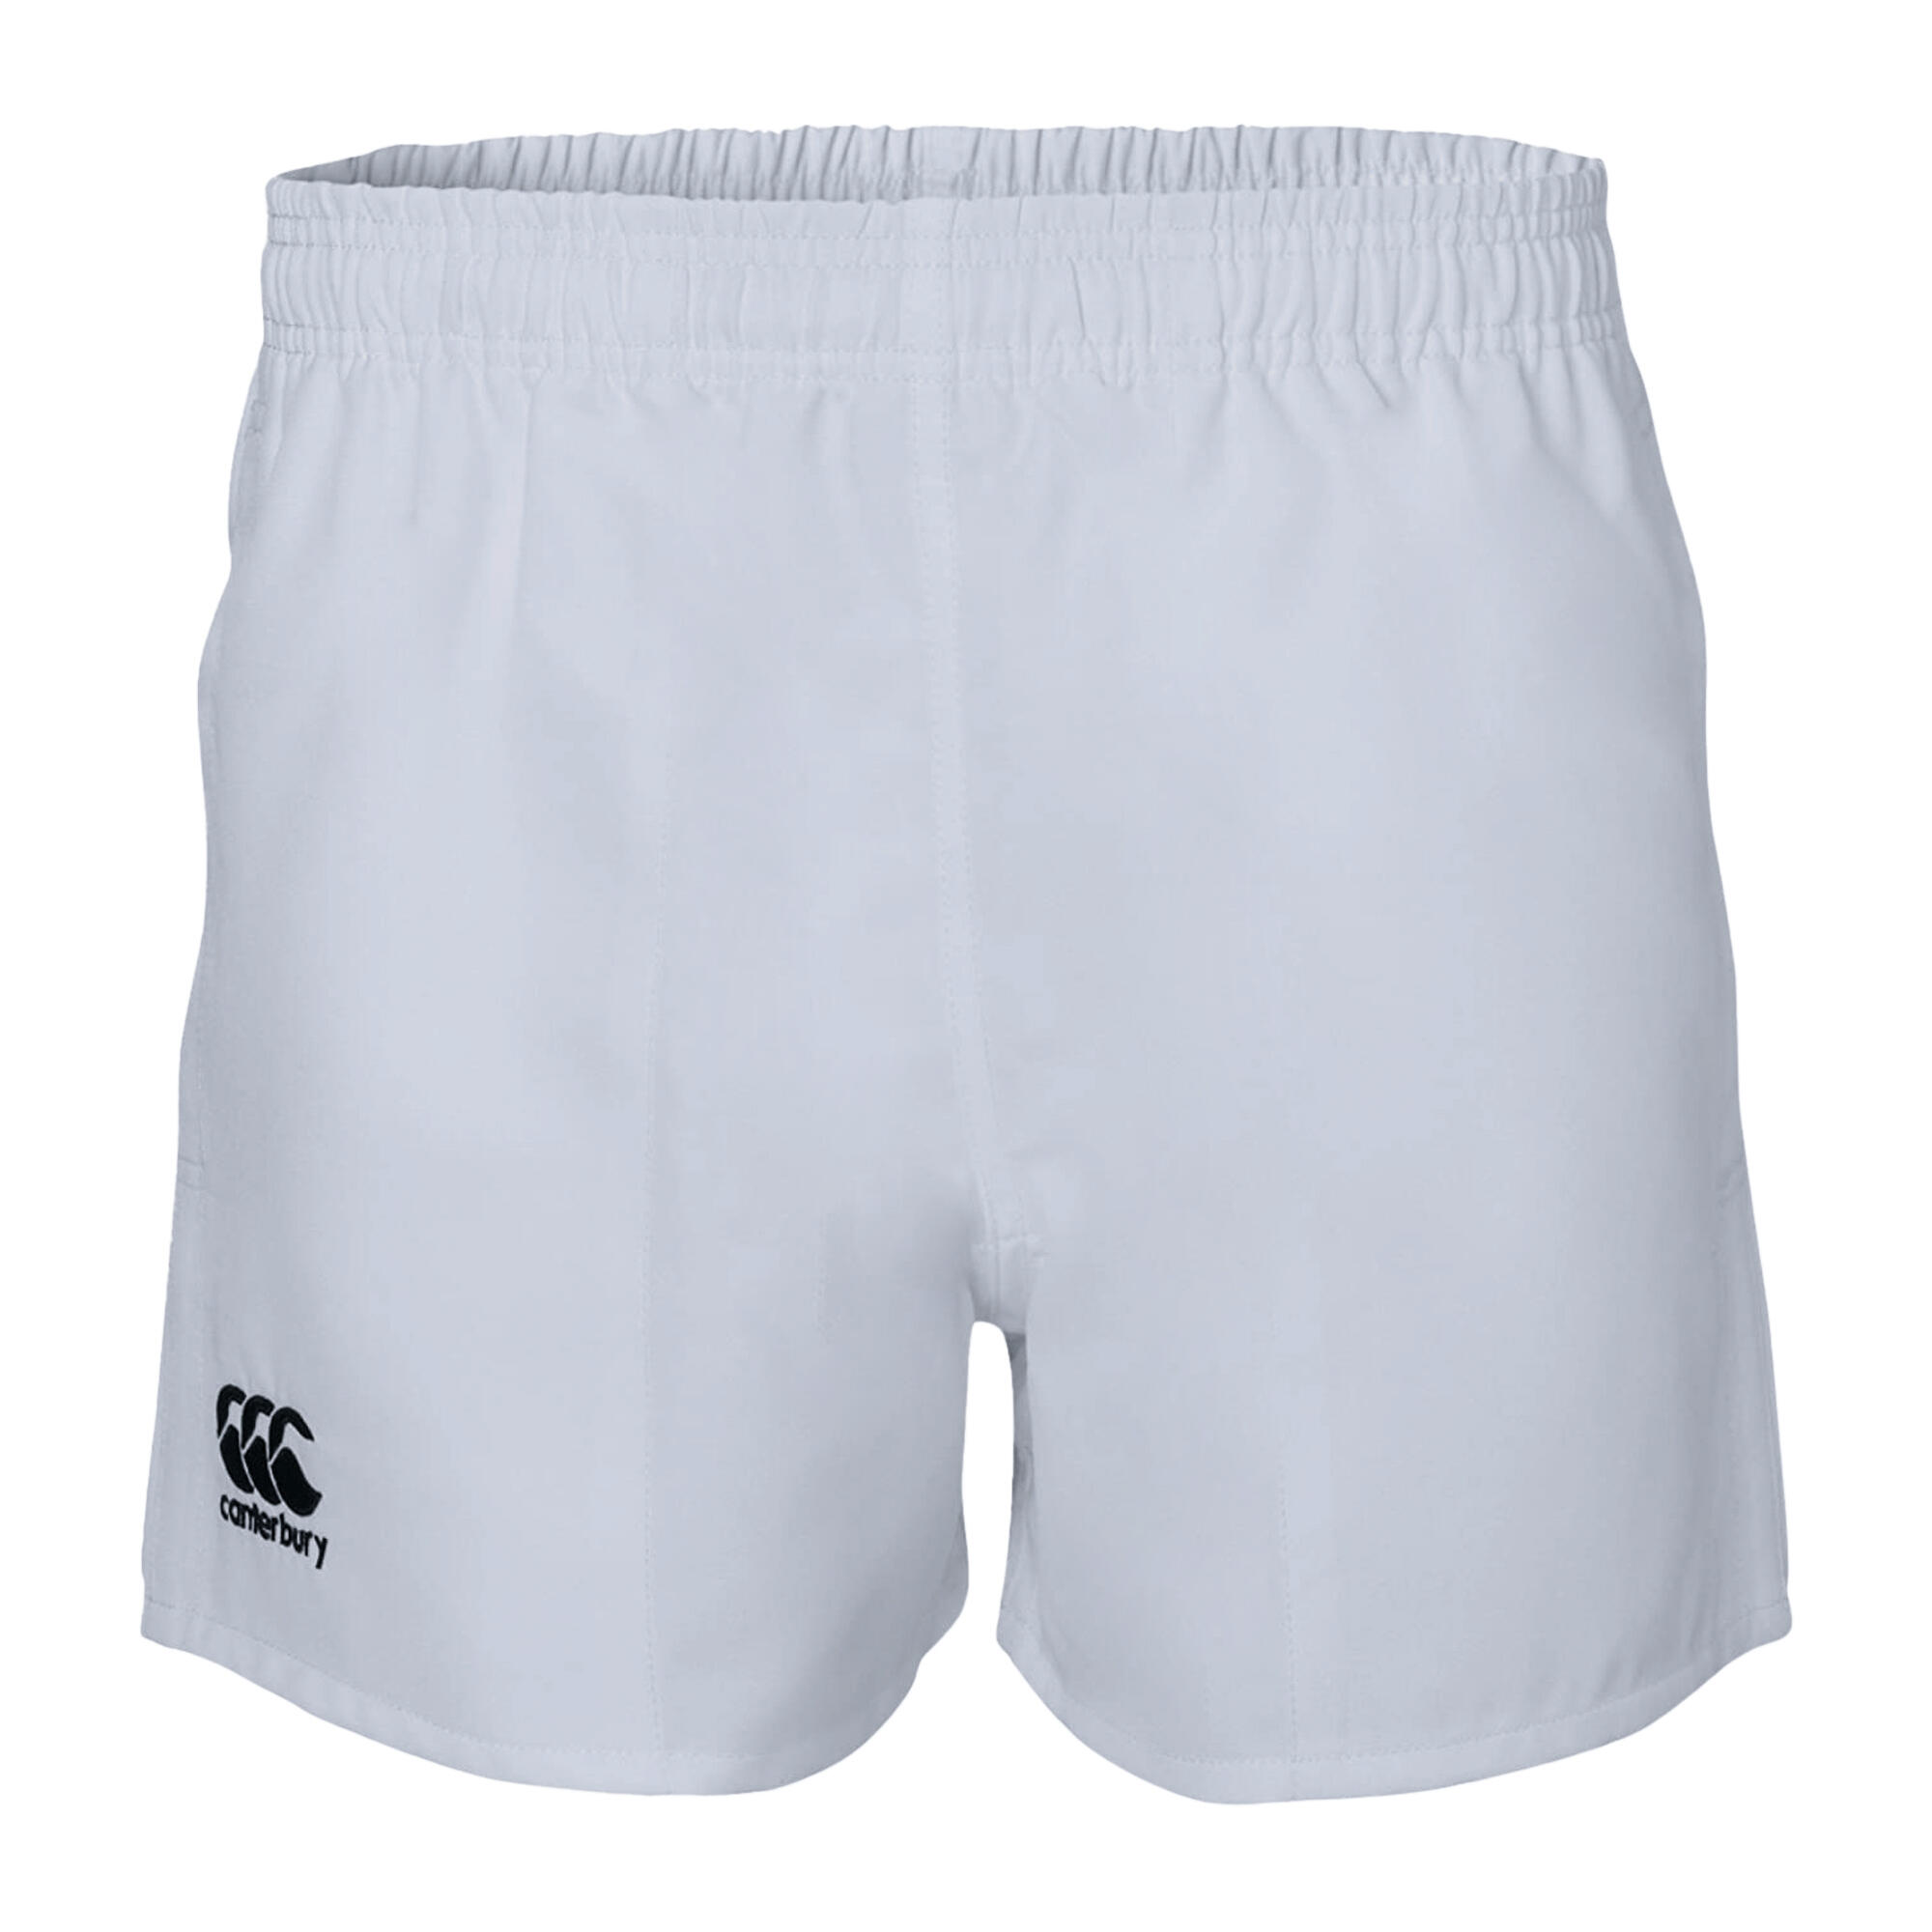 CANTERBURY Mens Professional Elasticated Sports Shorts (White)